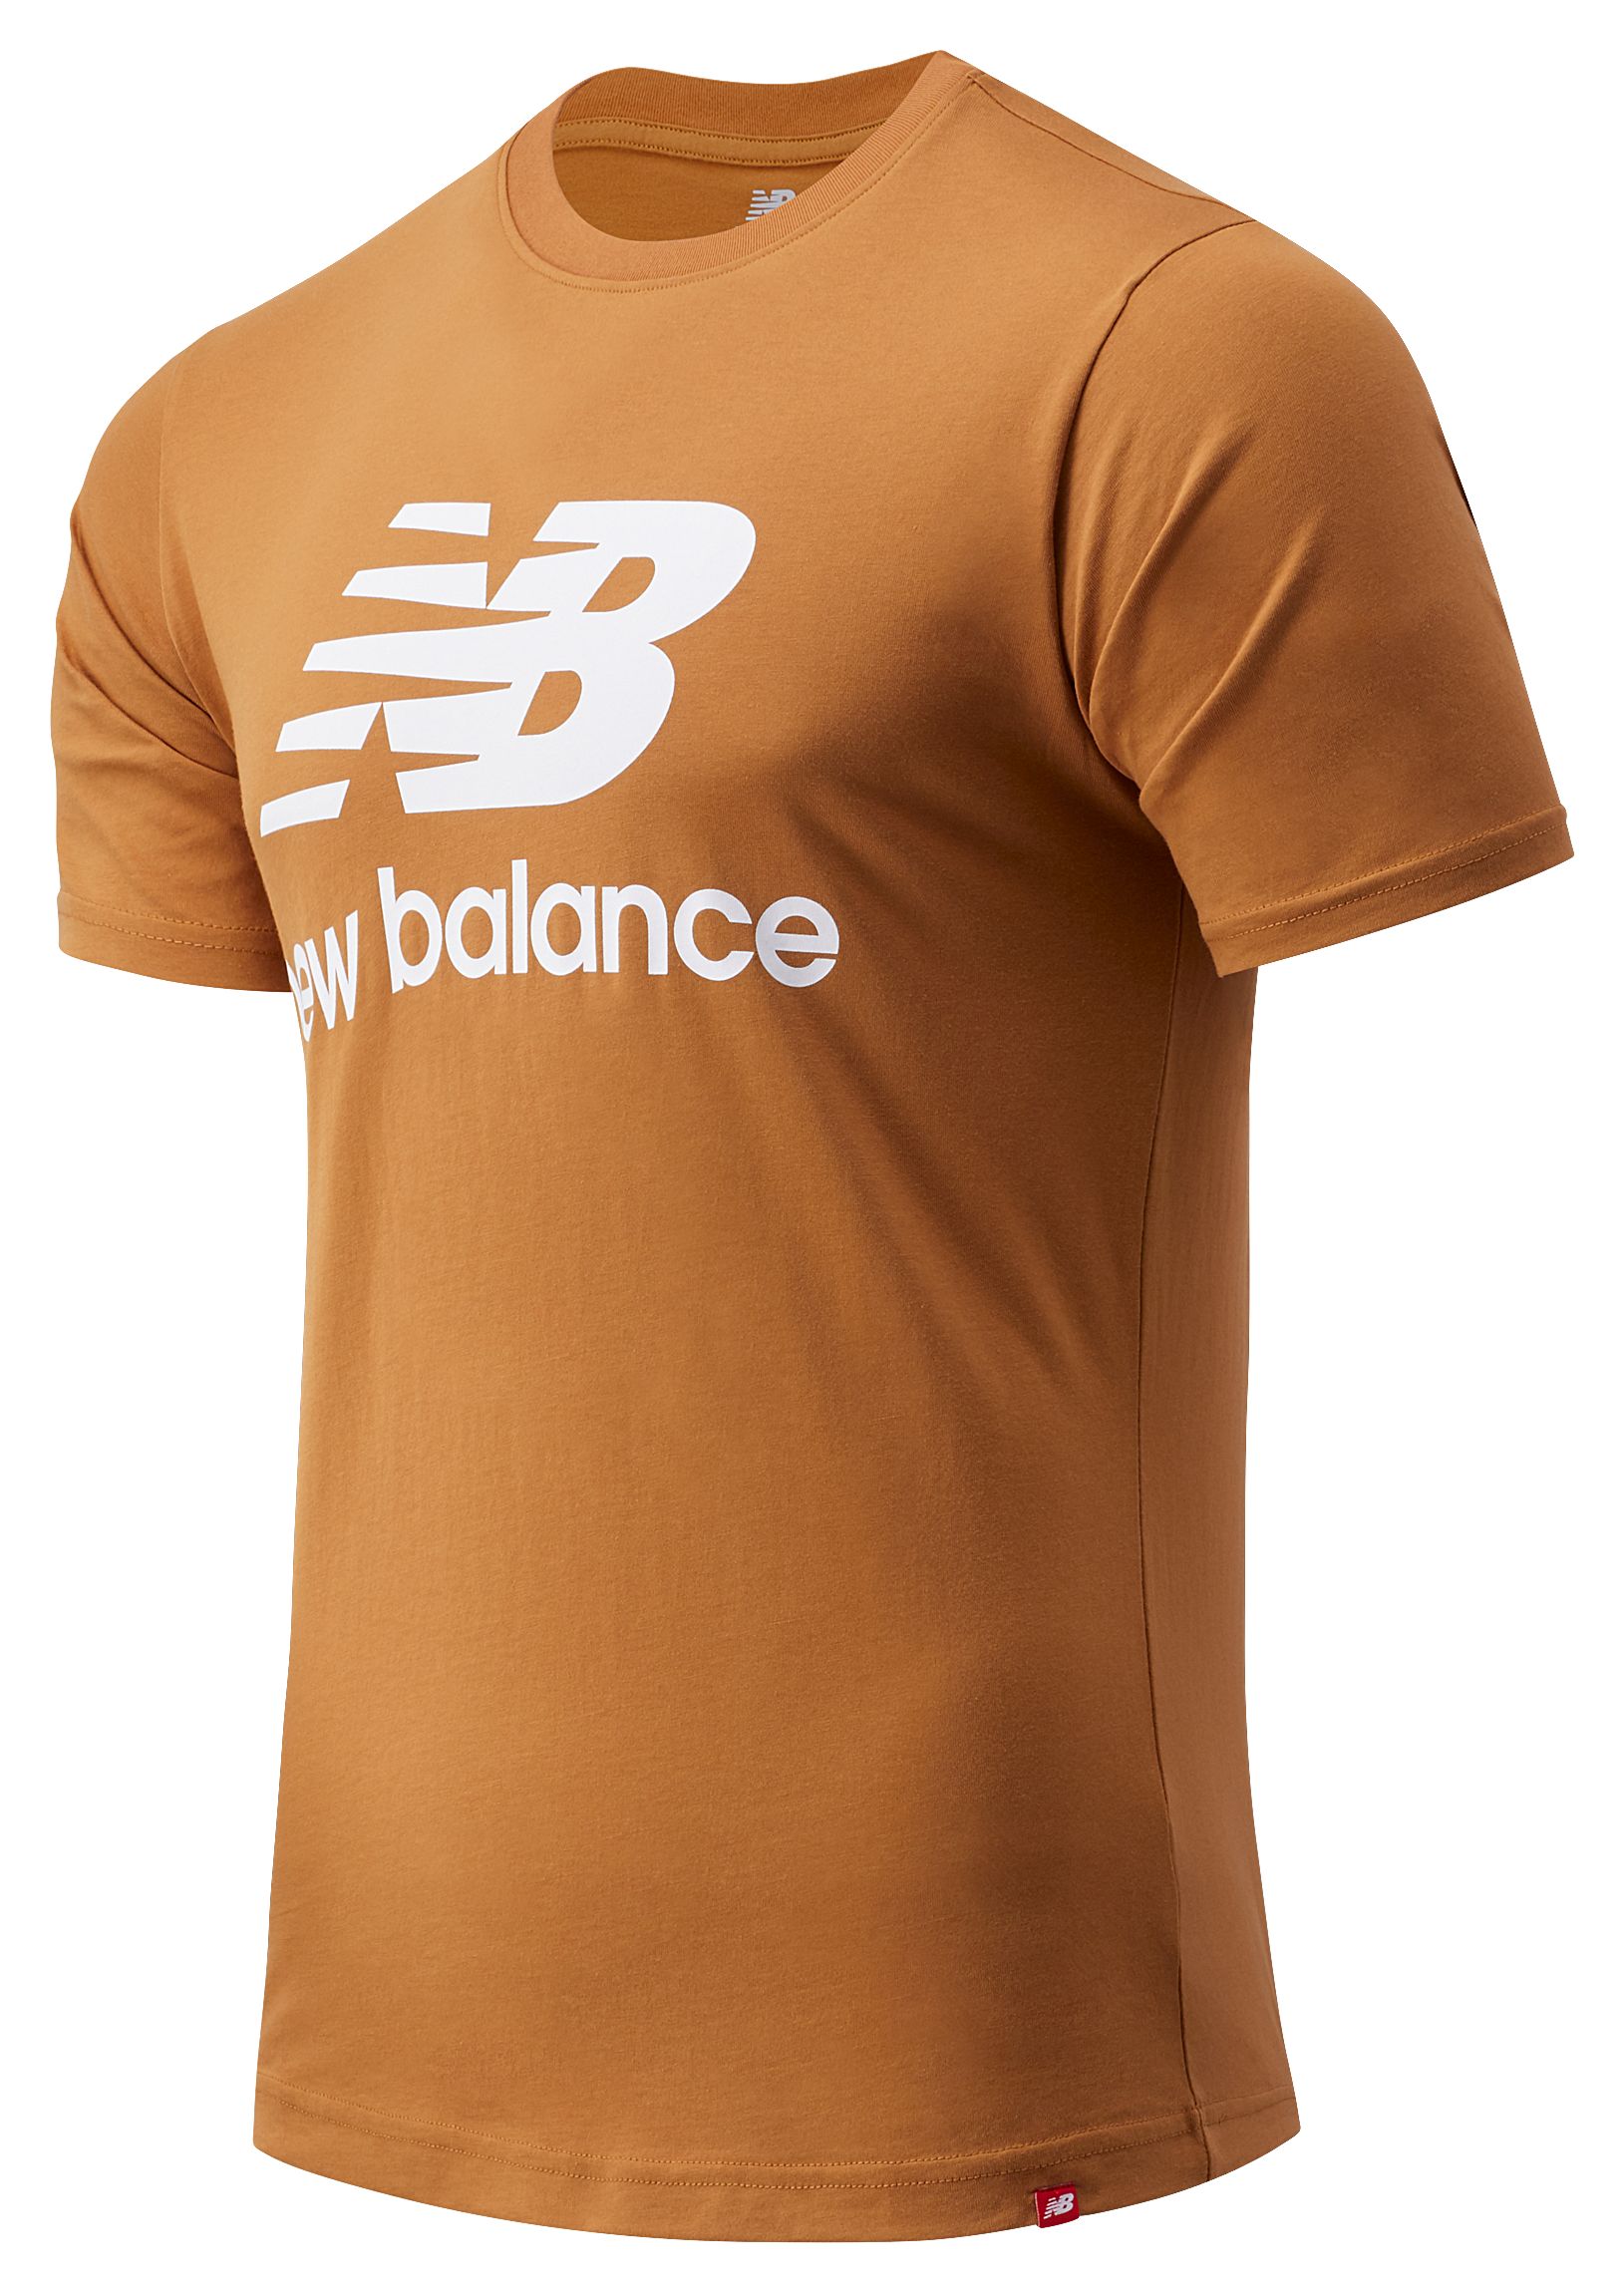 new balance tee shirt